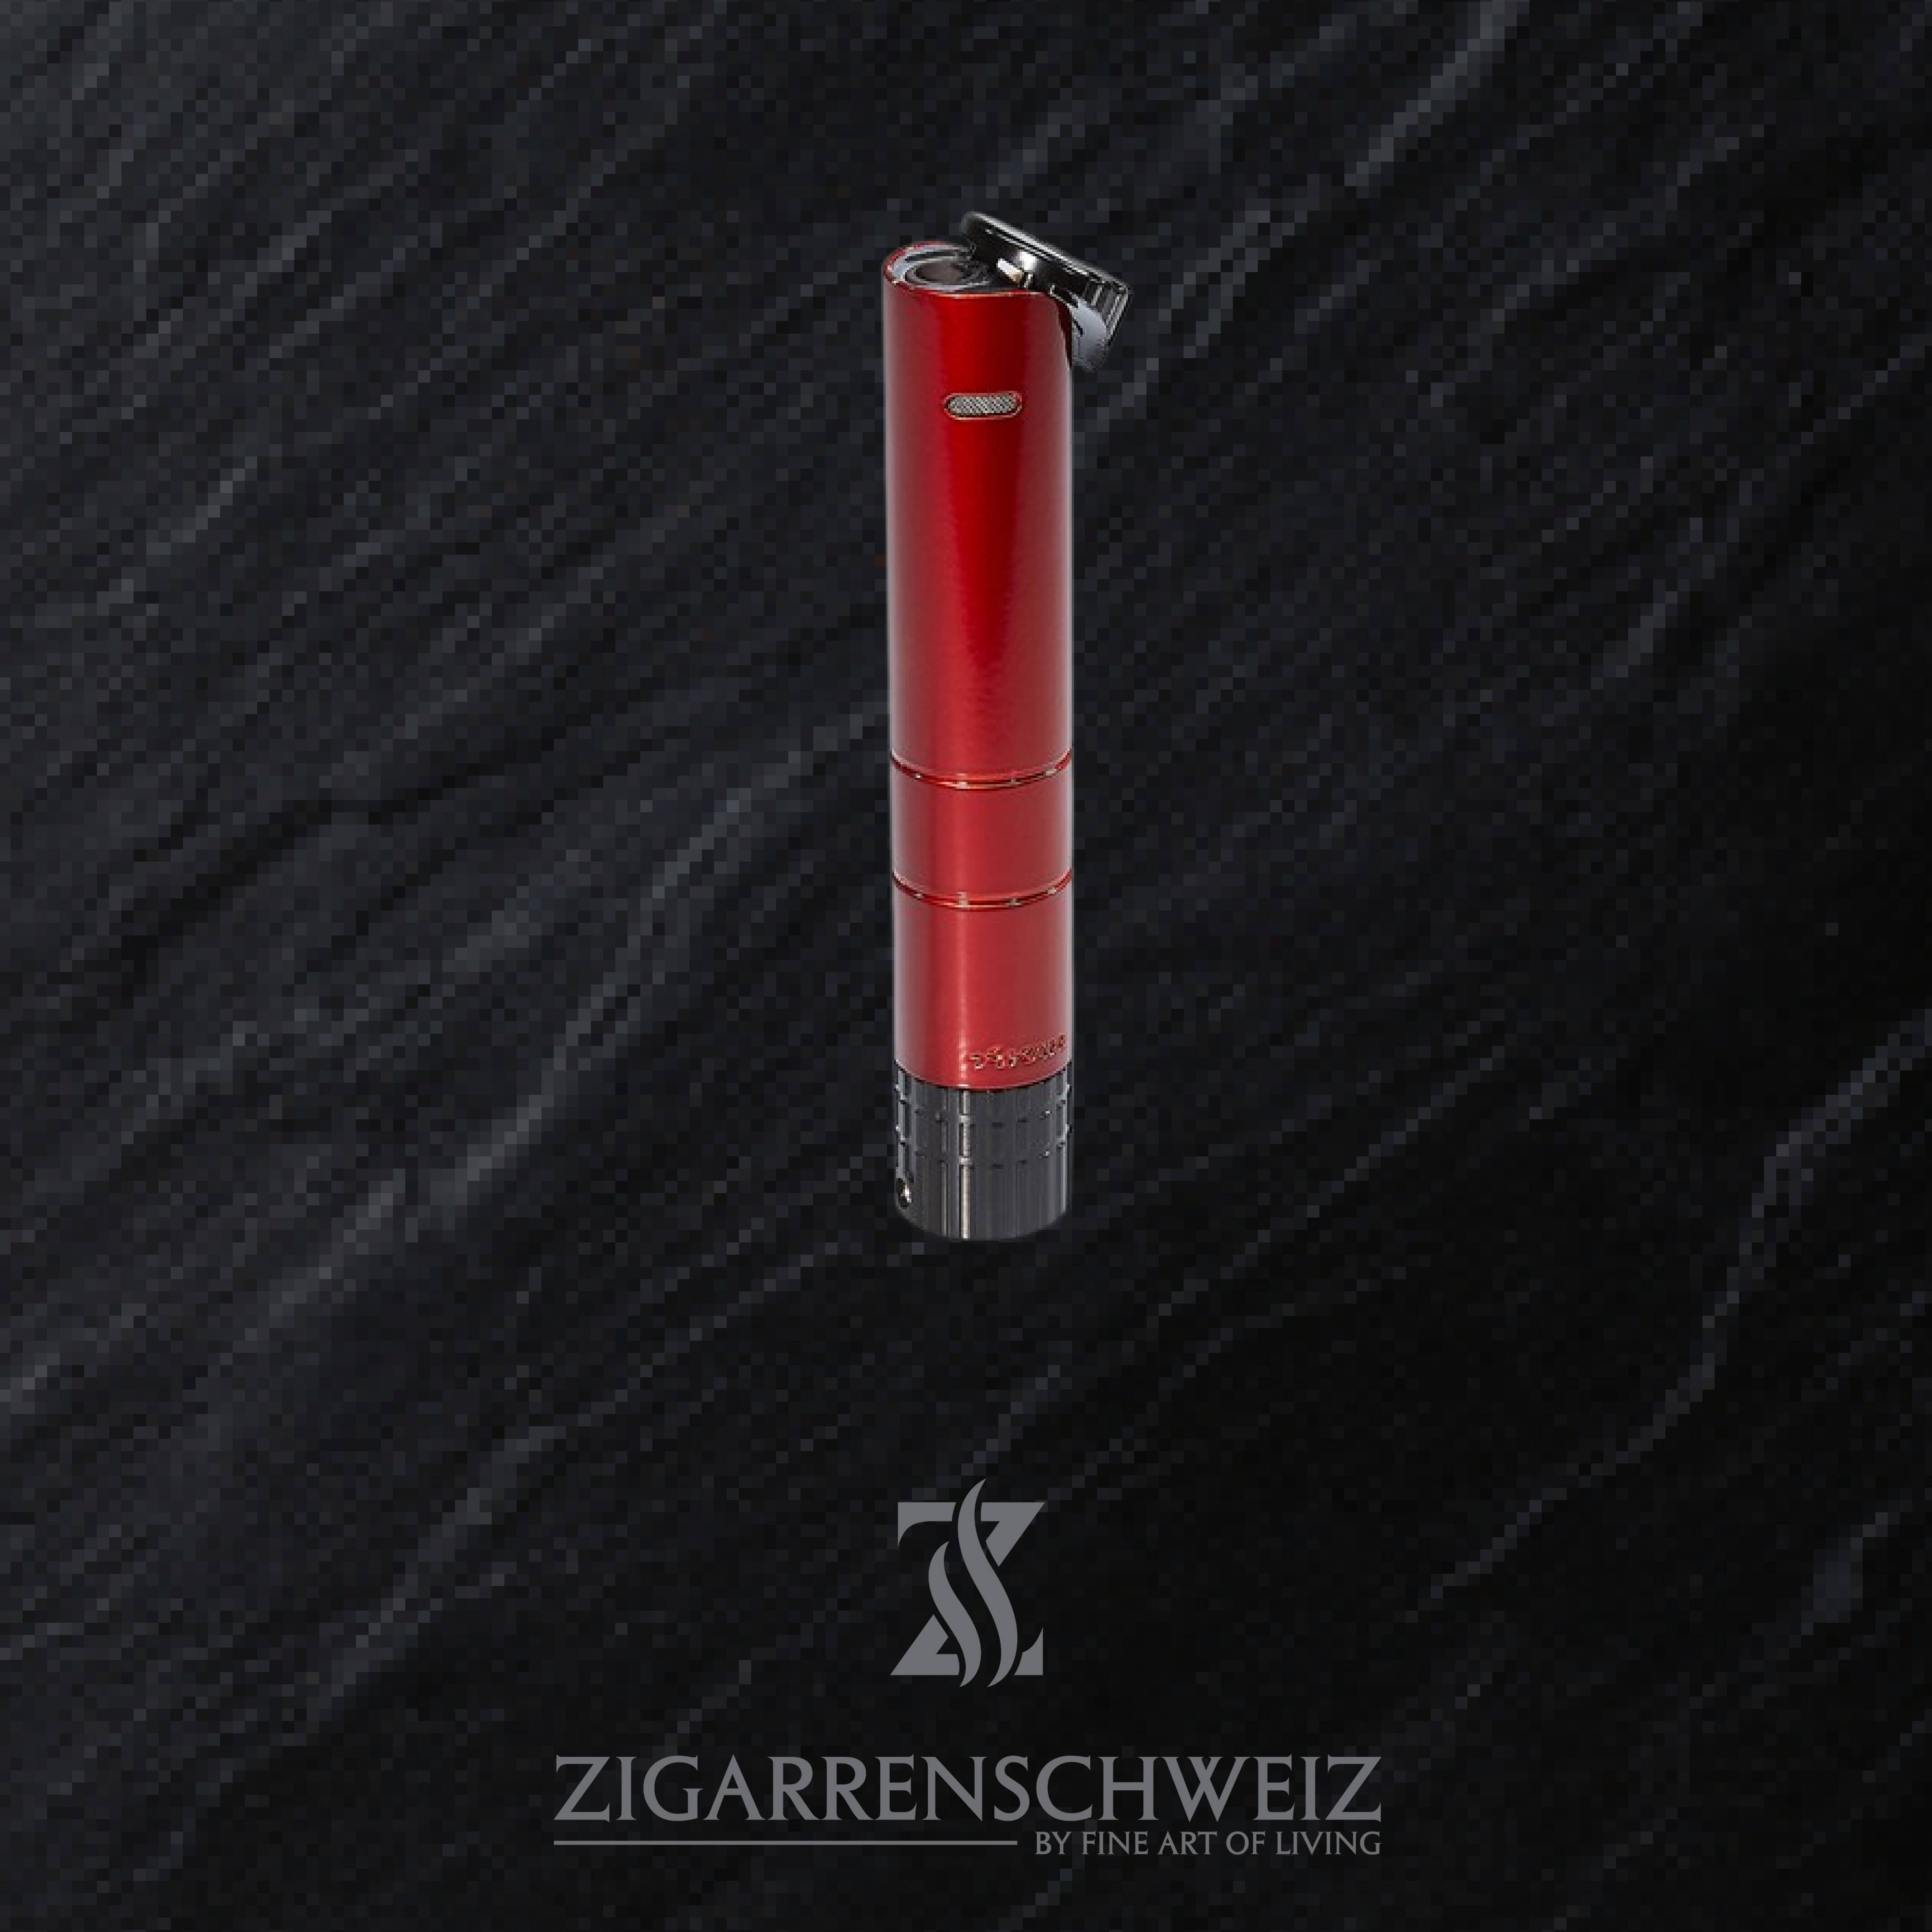 Xikar Turrim Single Jet-Flame Feuerzeug, Farbe: Rot, Deckel offen